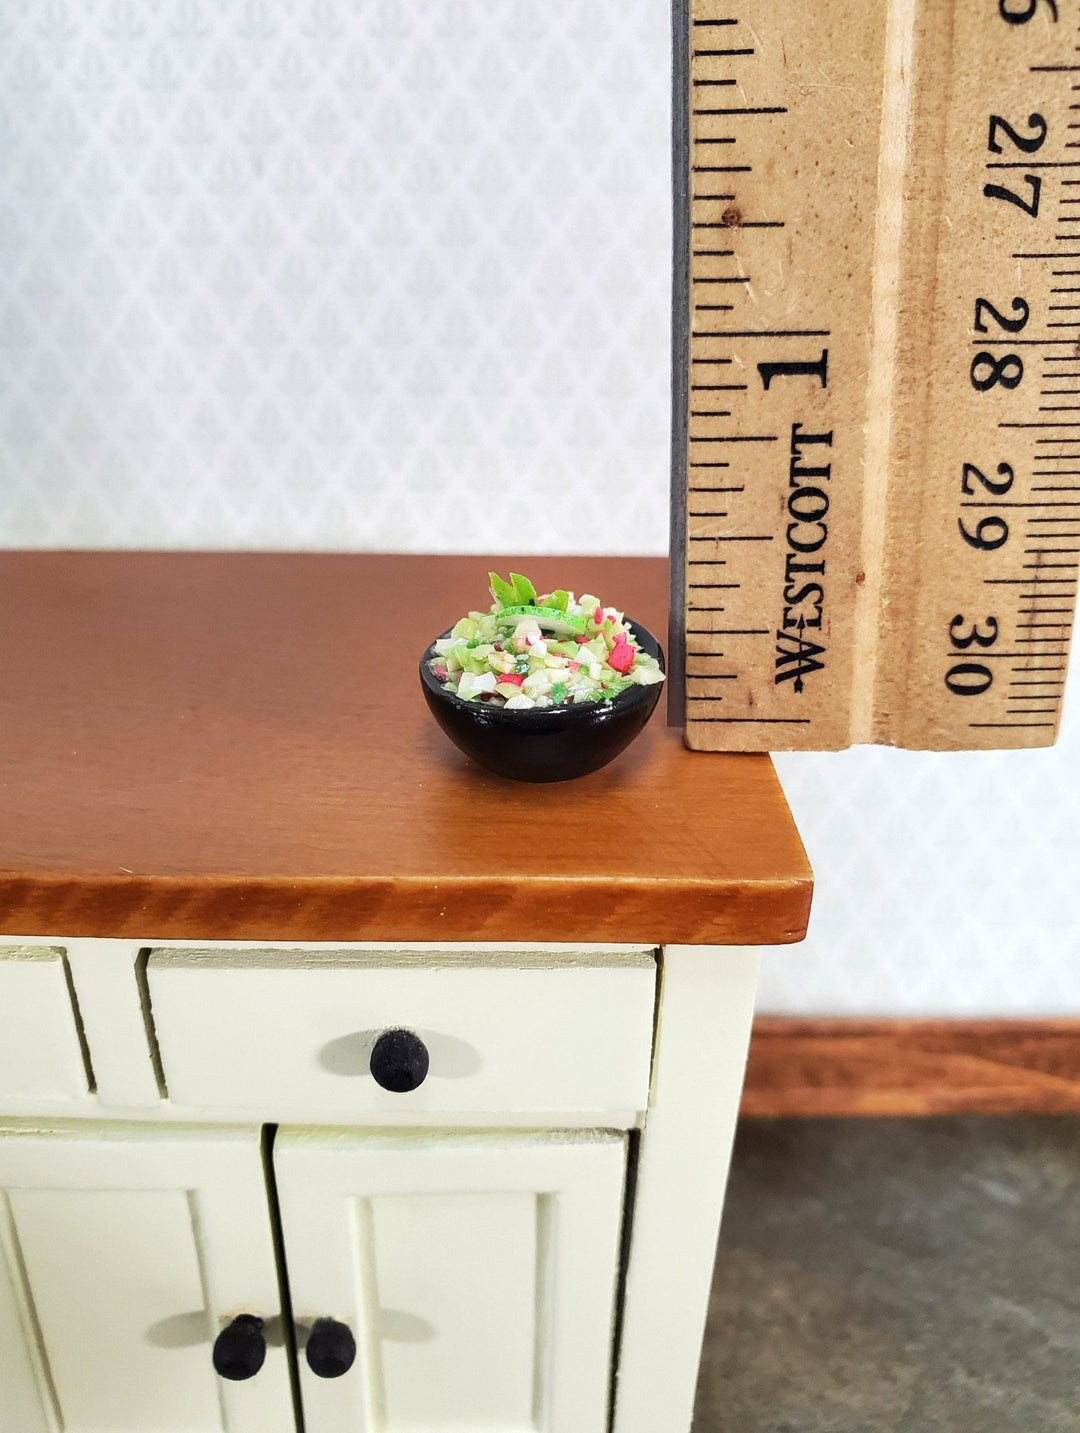 Miniature Bowl of Guacamole Salsa with Lime Slice 1:12 Scale Dollhouse Food - Miniature Crush